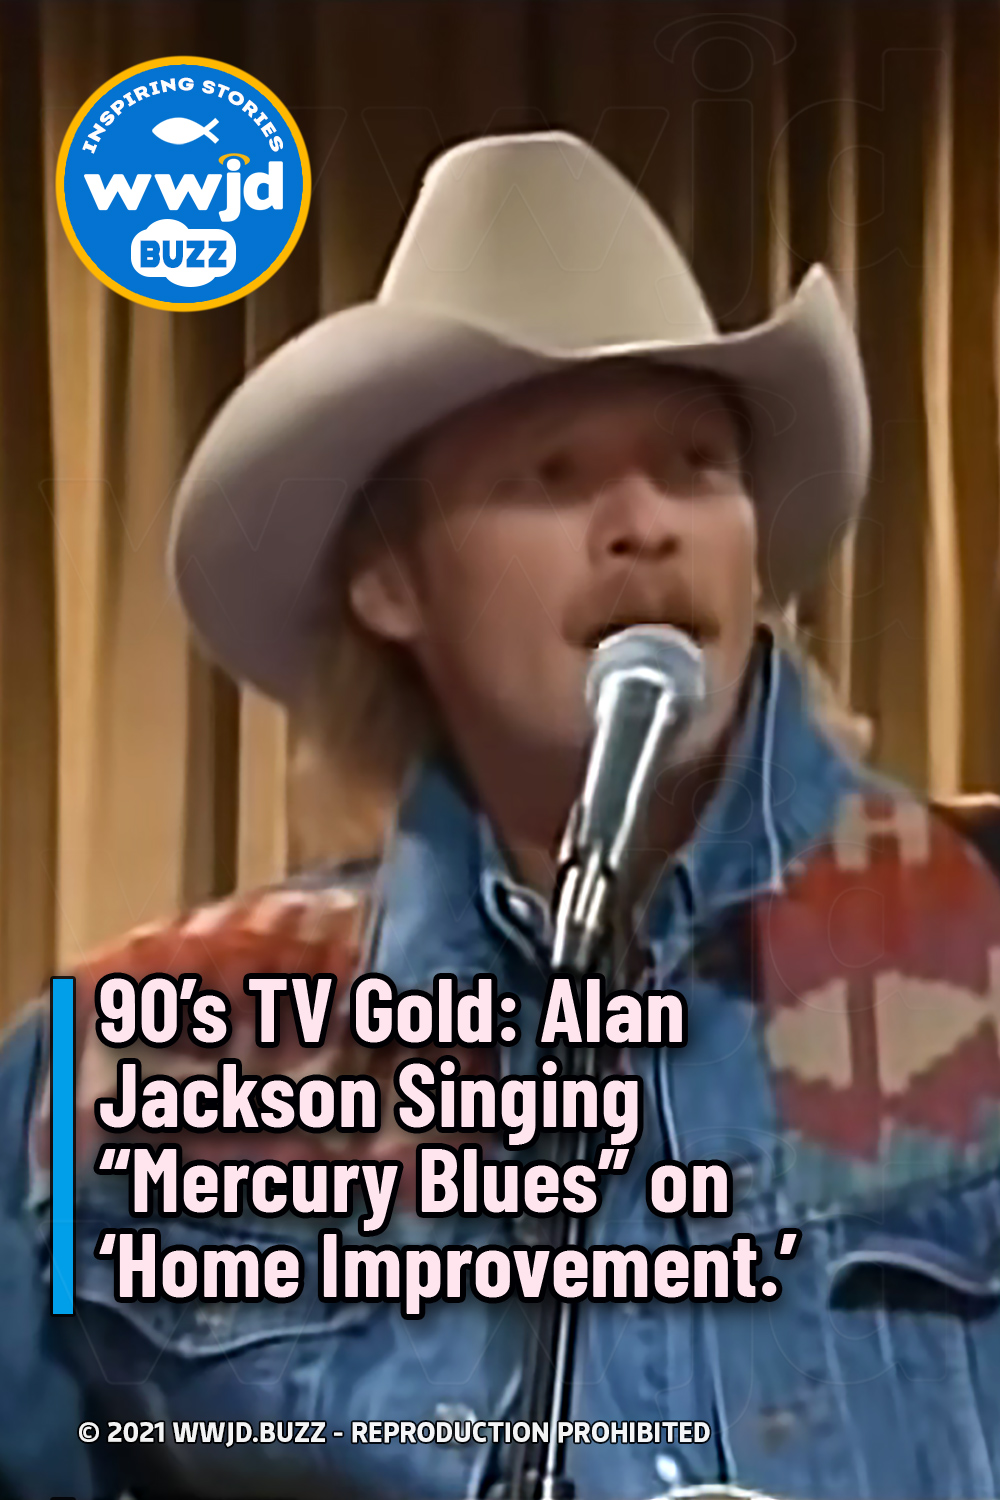 90’s TV Gold: Alan Jackson Singing “Mercury Blues” on ‘Home Improvement.’